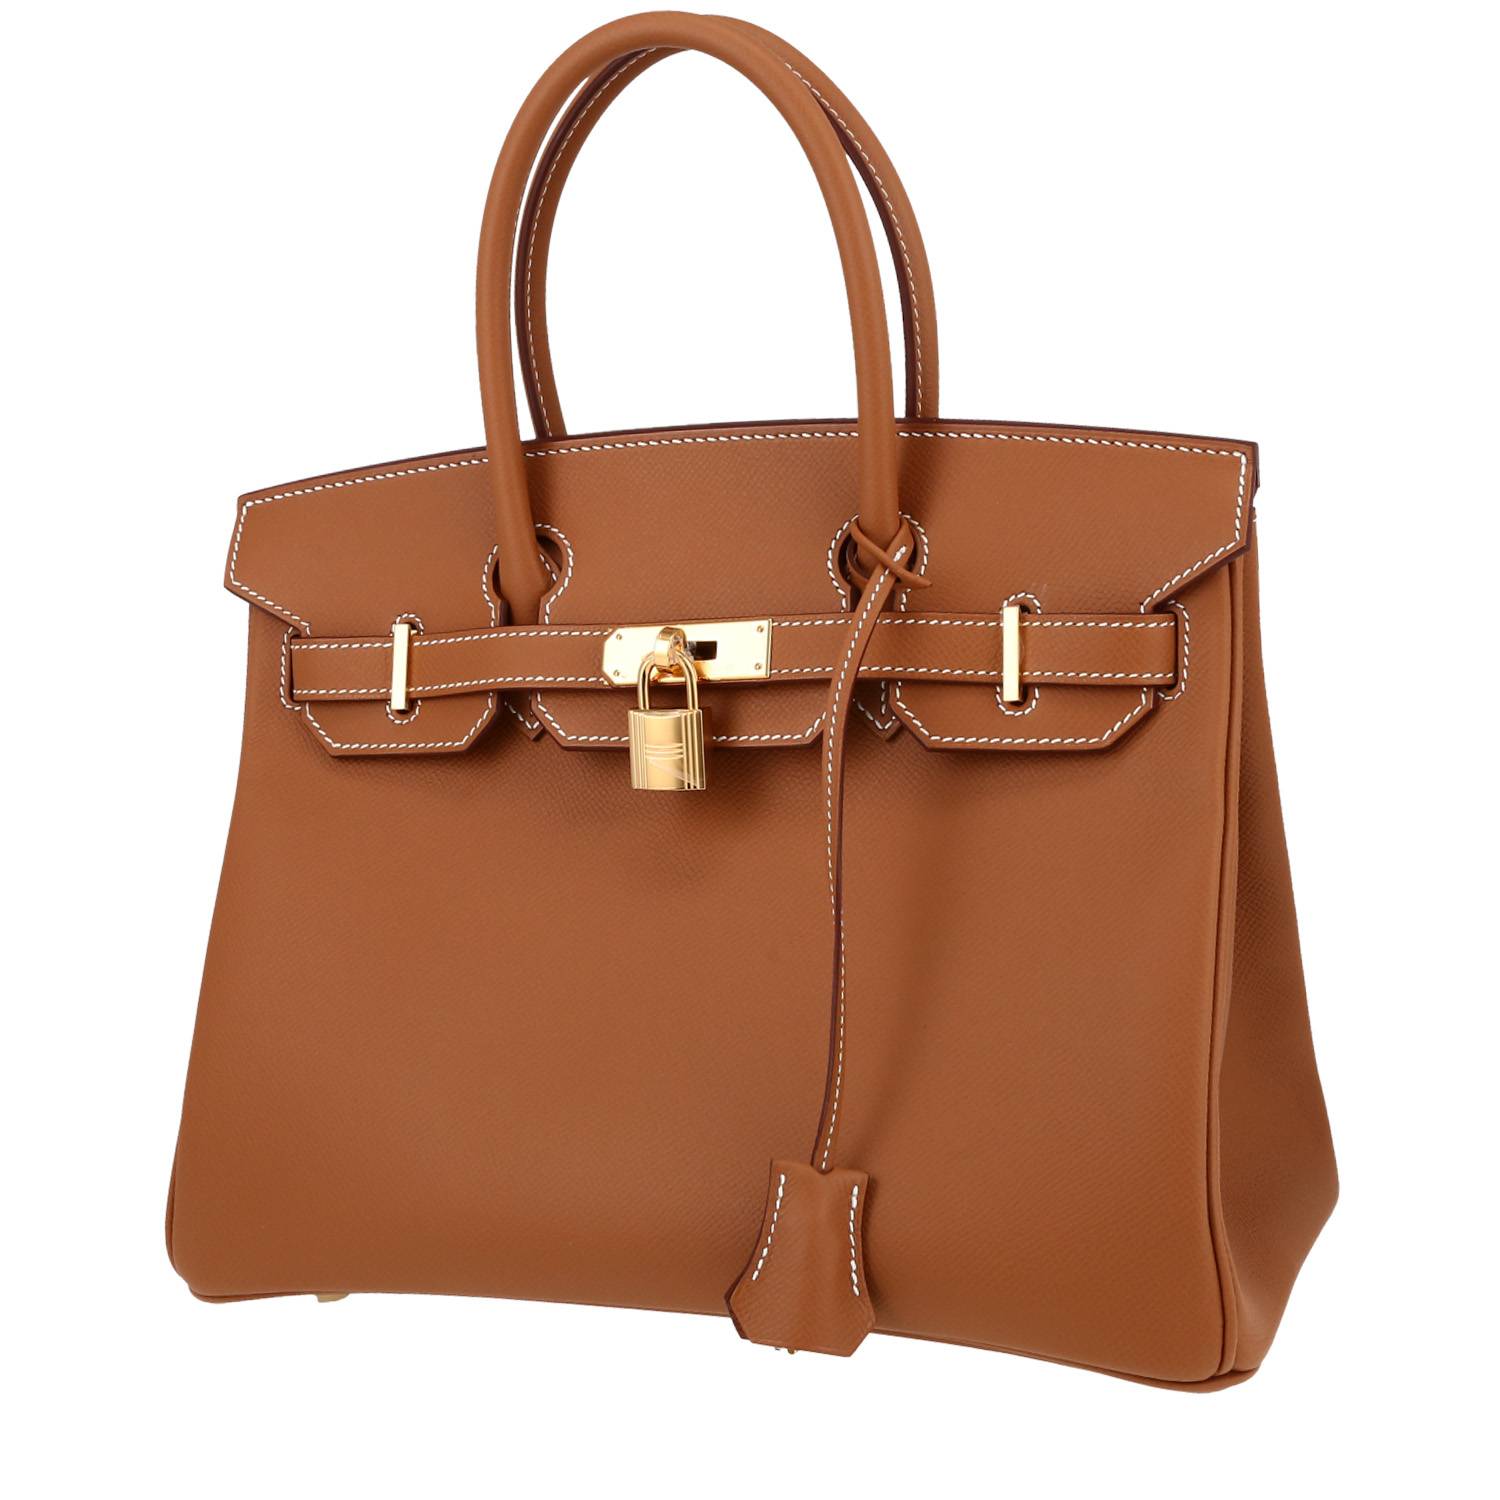 Hermès  Birkin 30 cm handbag  in gold epsom leather - 00pp